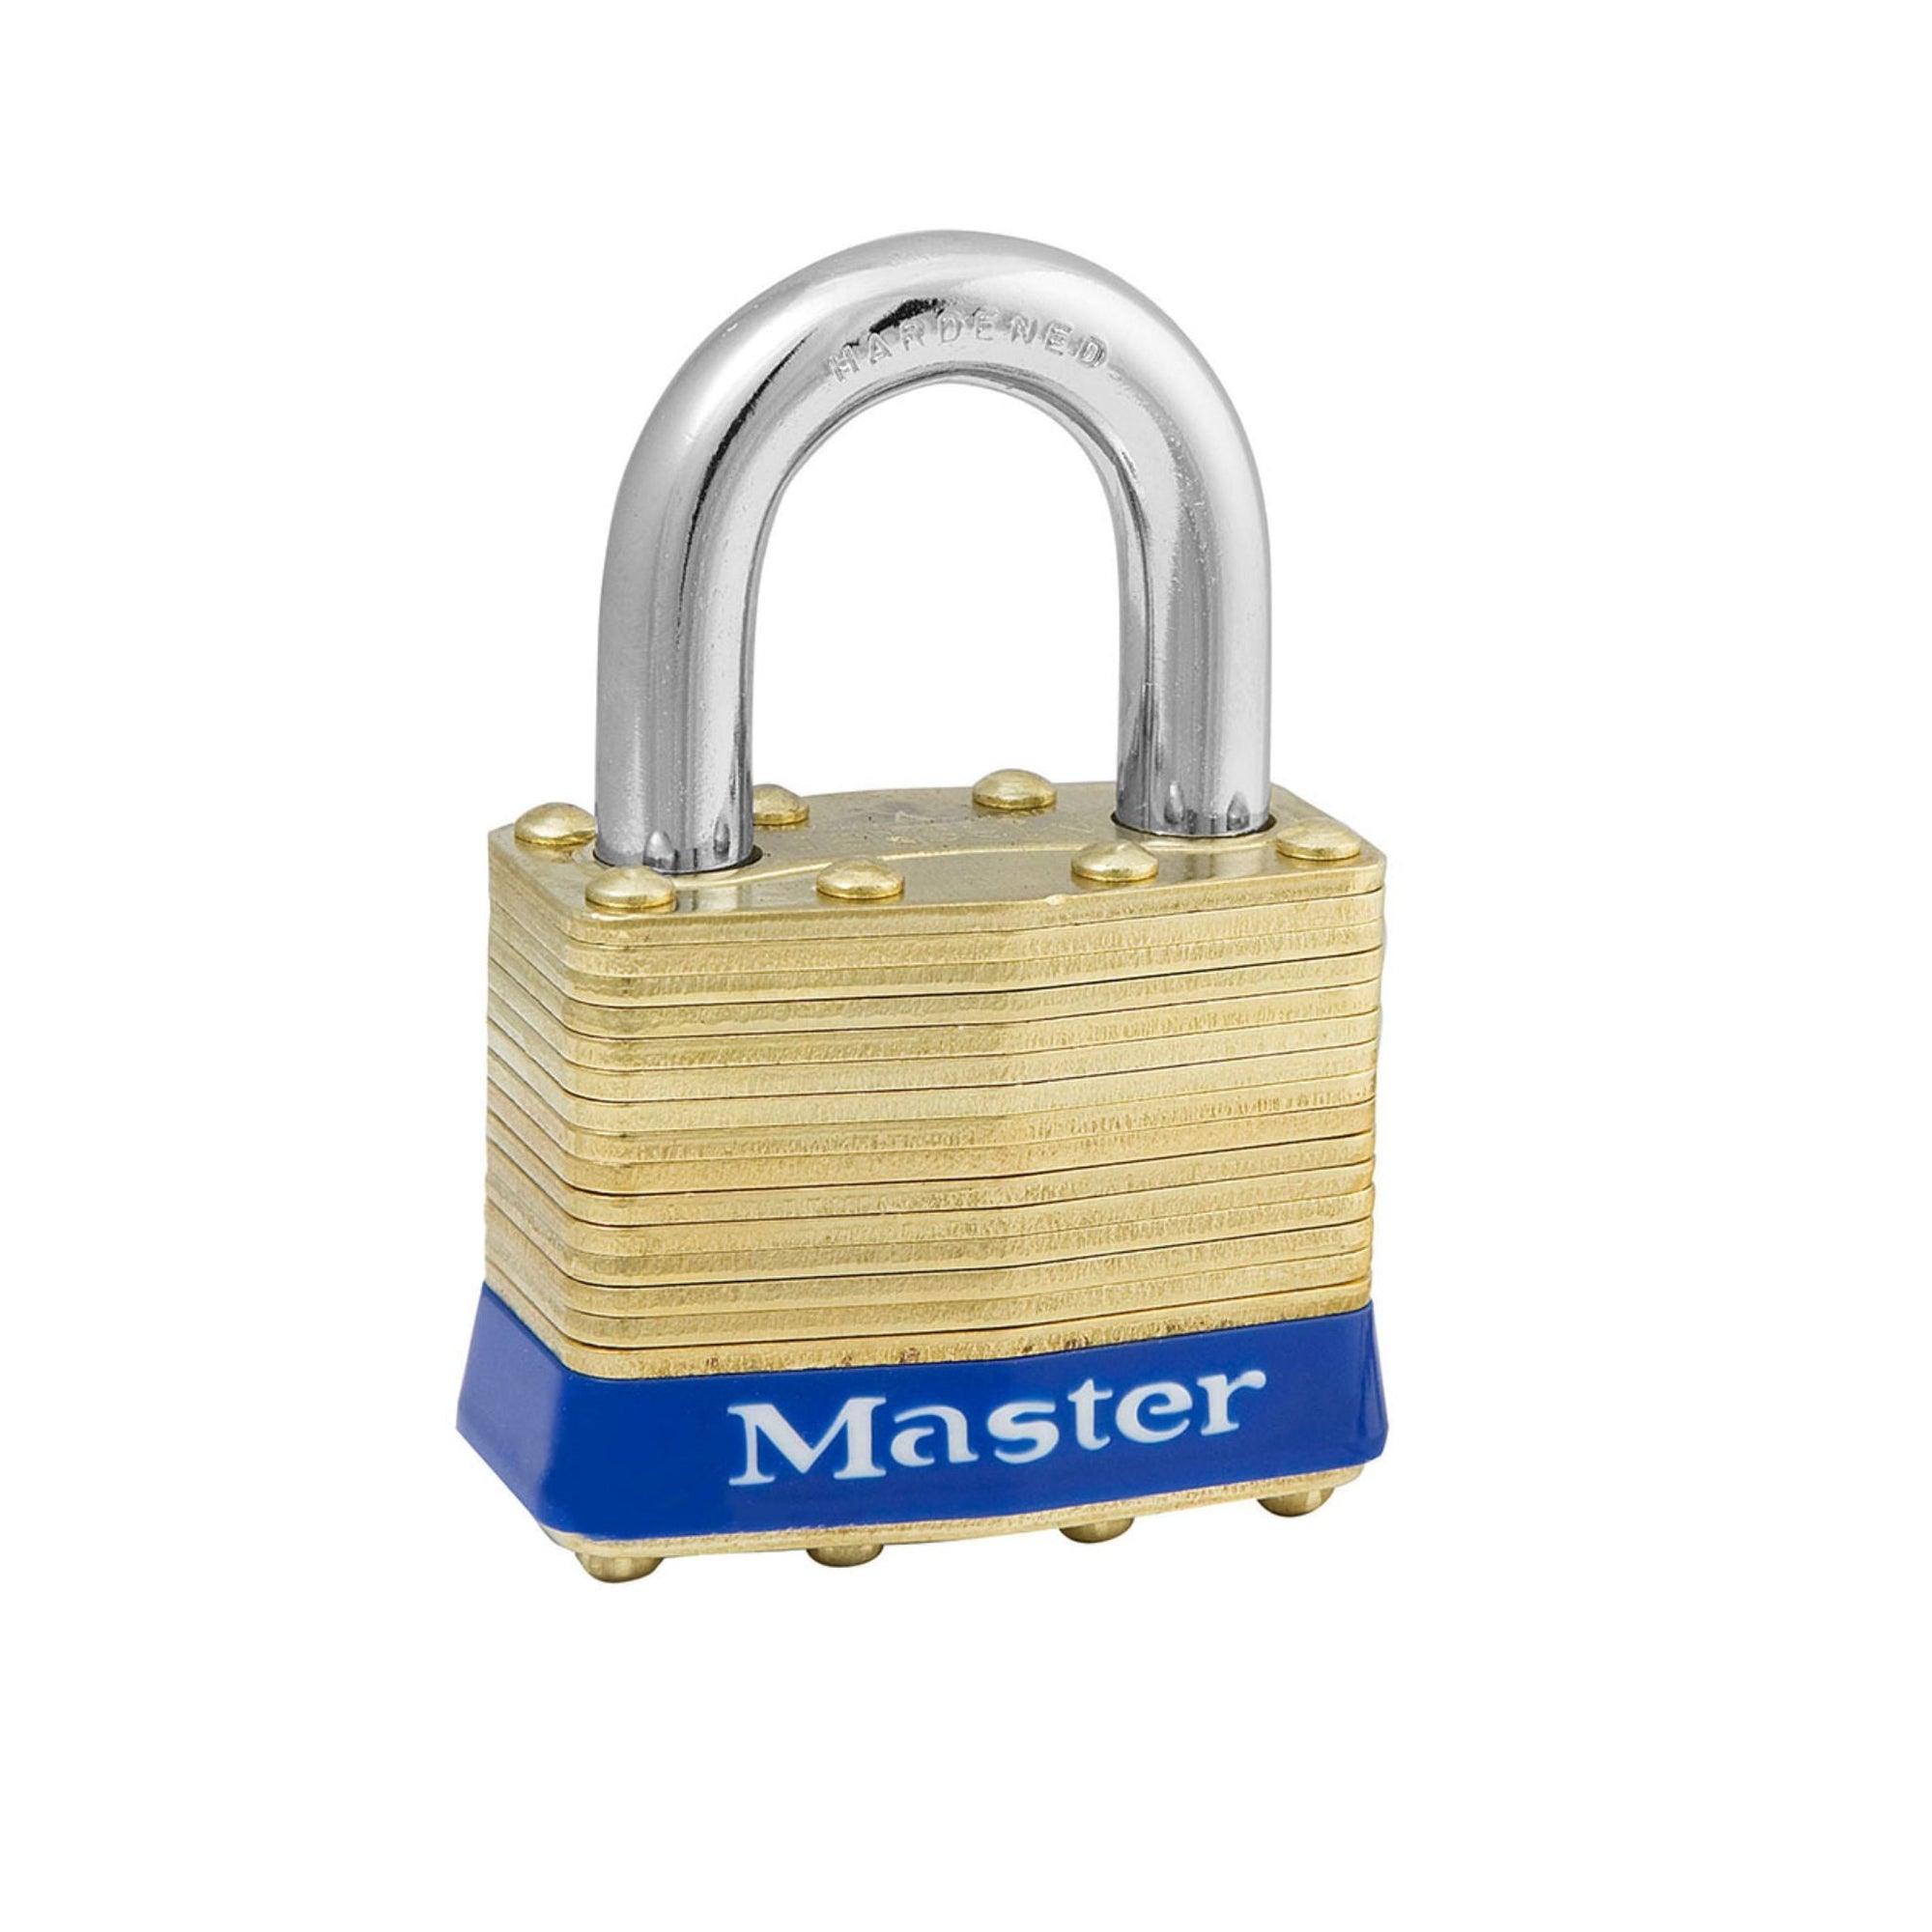 Master Lock 2KA 0324 Lock Laminated brass No. 2 Series Padlock Keyed to Match Existing Key Number KA0324 - The Lock Source